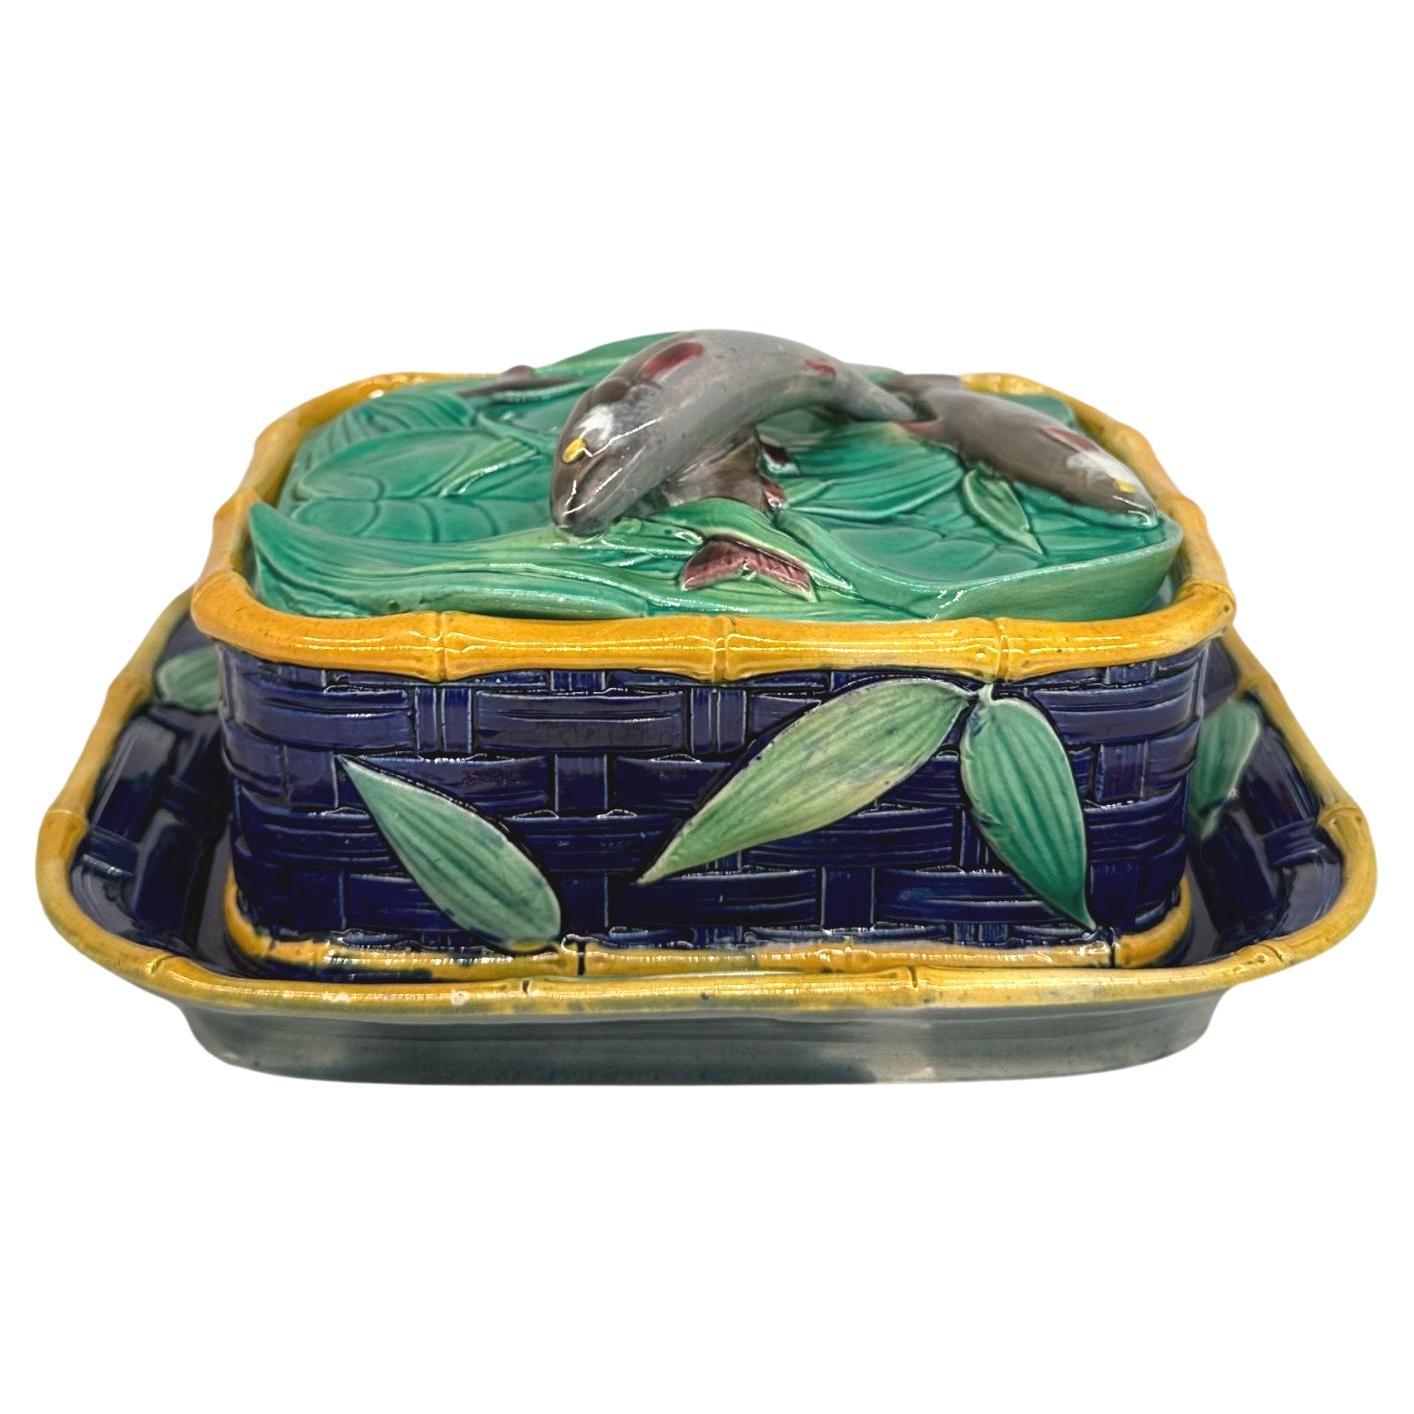 A Victoria Pottery Majolica Cobalt Basketweave Sardine Box, English, ca. 1883